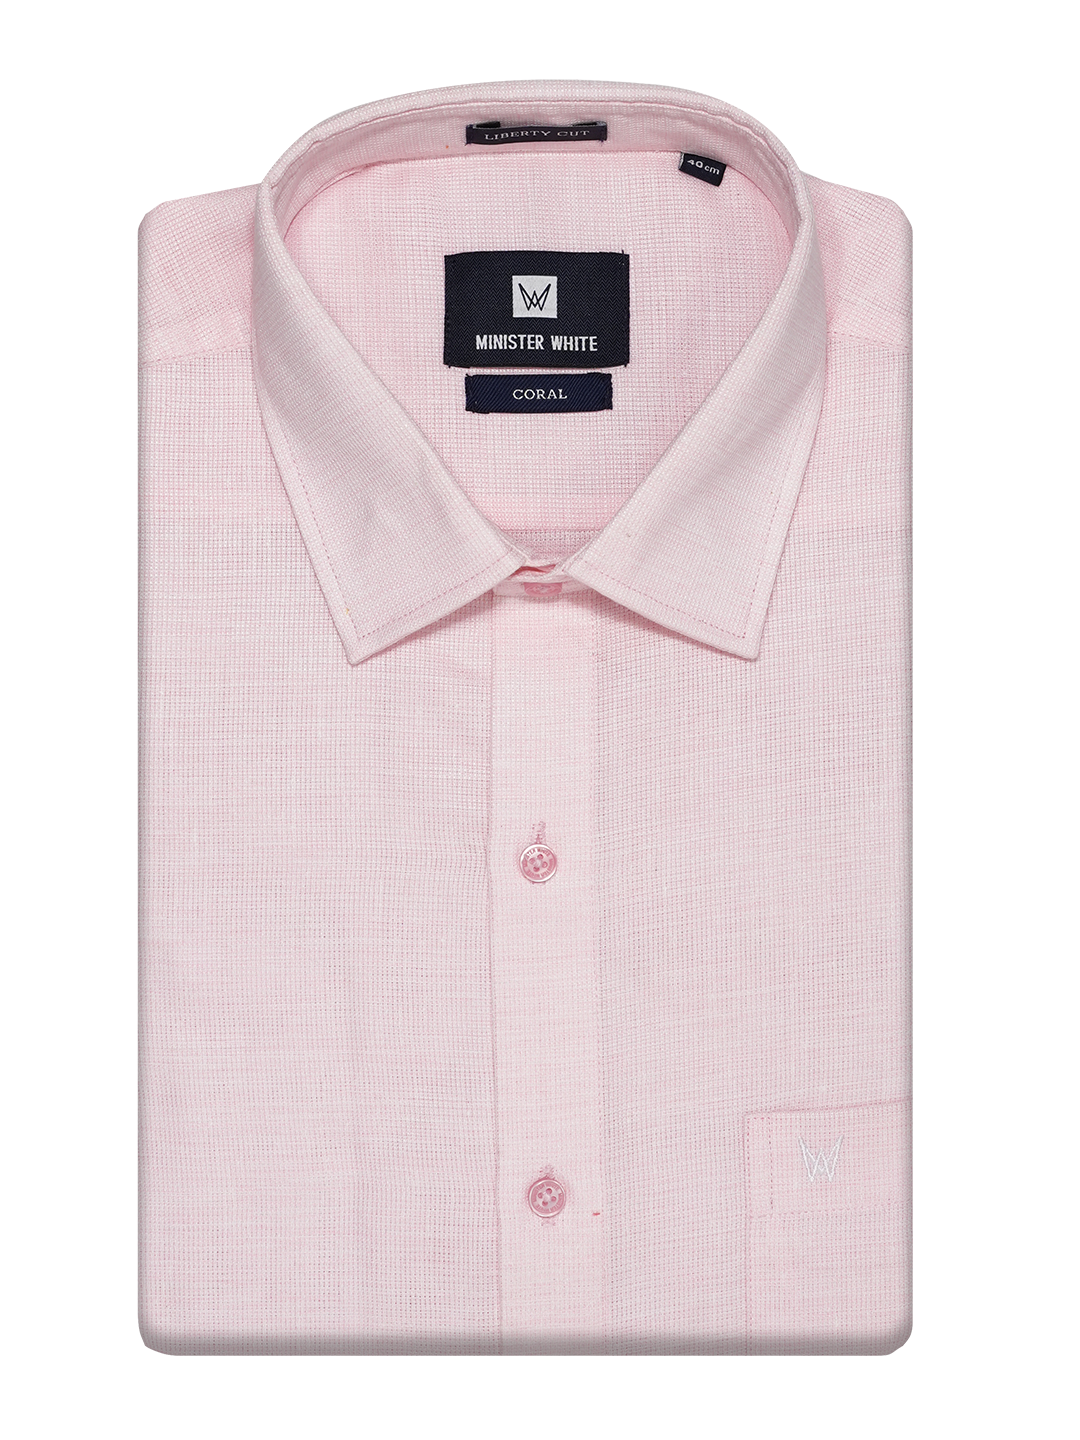 Mens Starch Cotton Pink Colour Regular Fit Shirt Coral